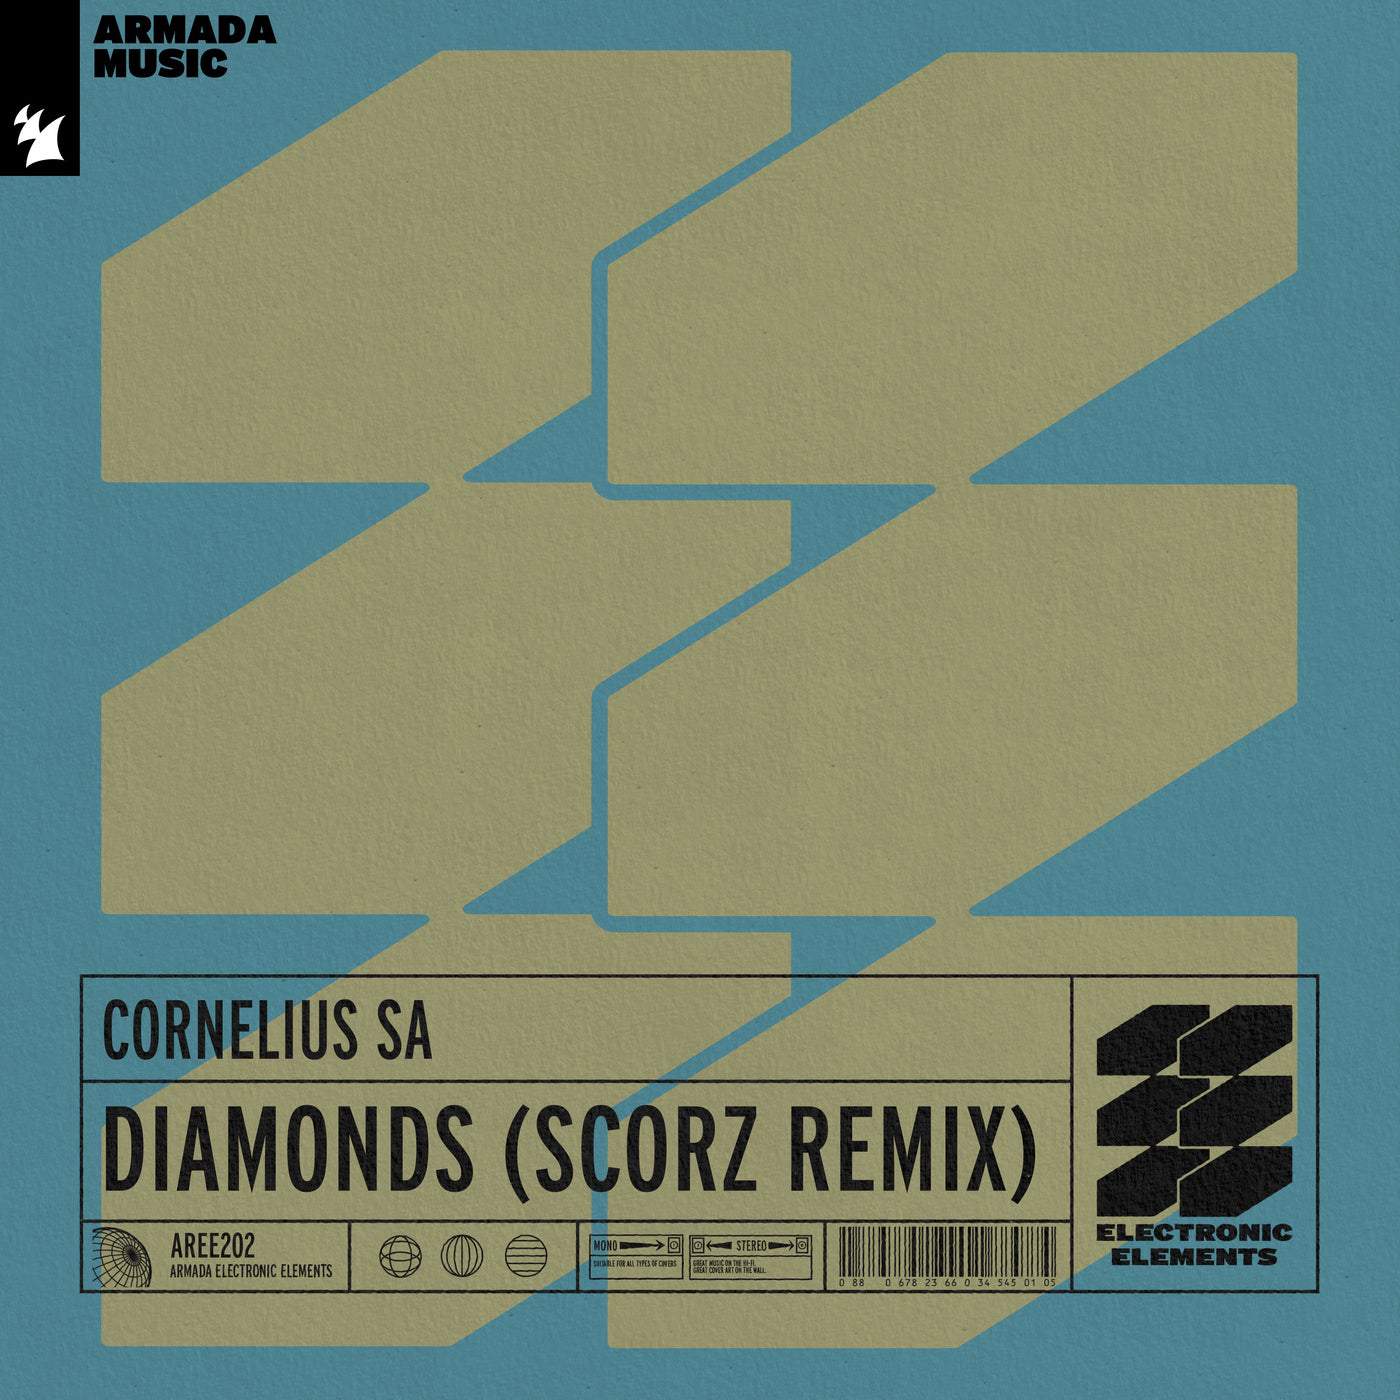 Download Diamonds - Scorz Remix on Electrobuzz